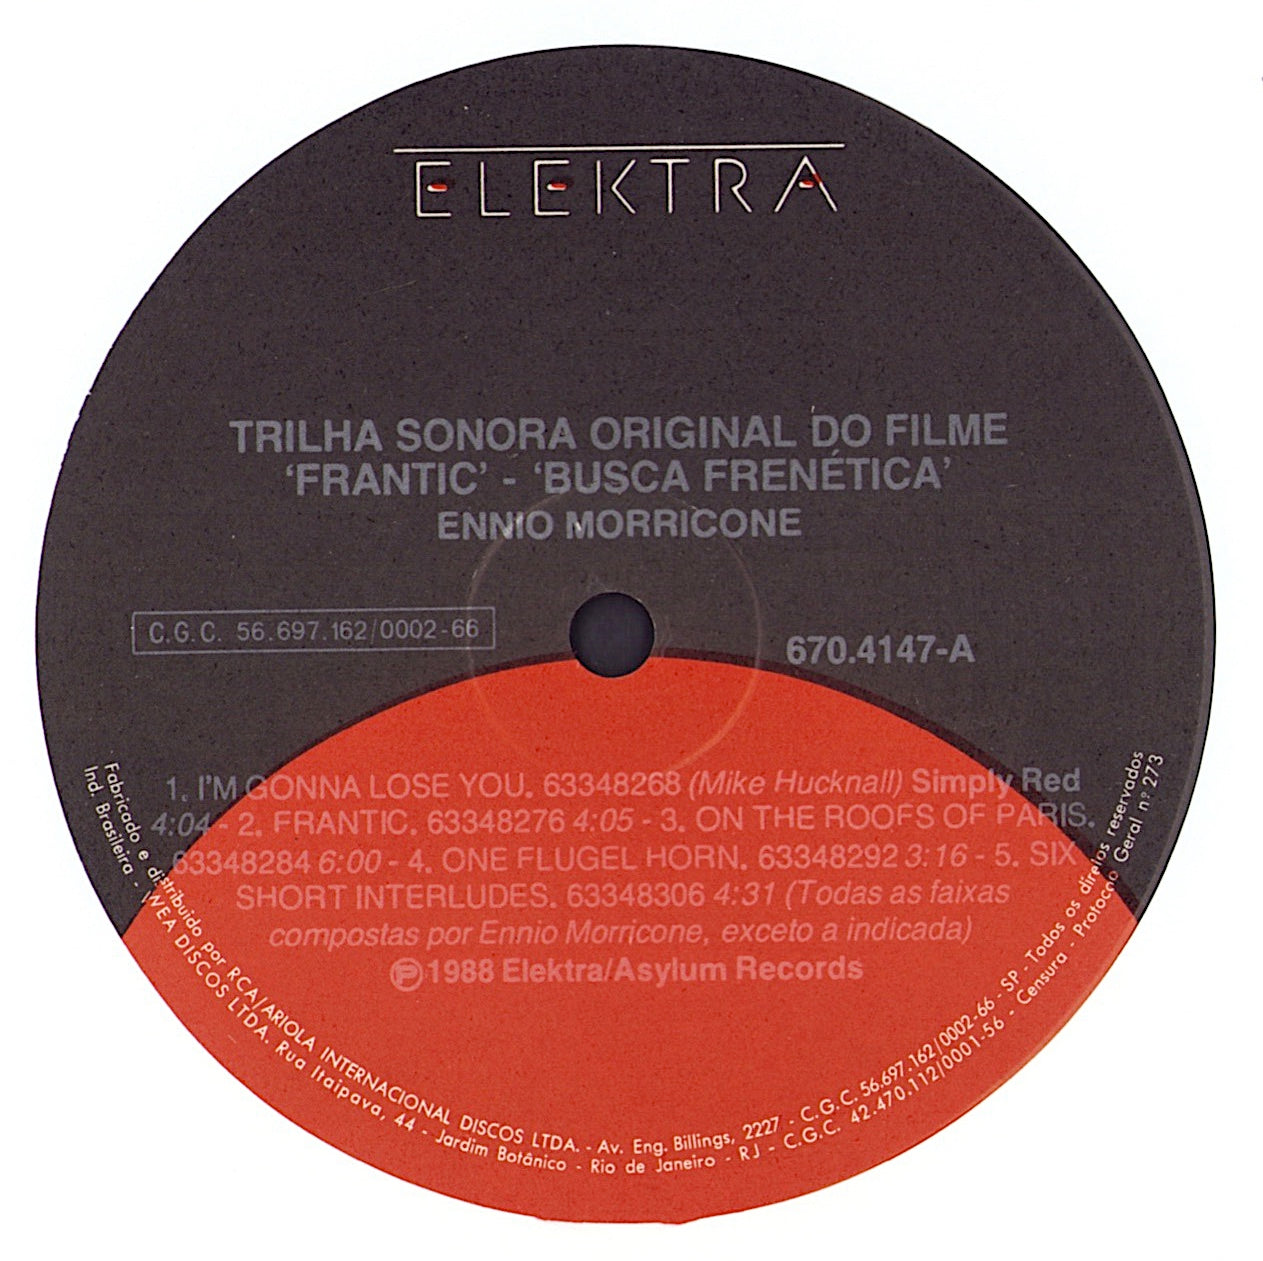 Ennio Morricone - Trilha Sonora Original Do Filme Frantic - Busca Frenética Vinyl LP